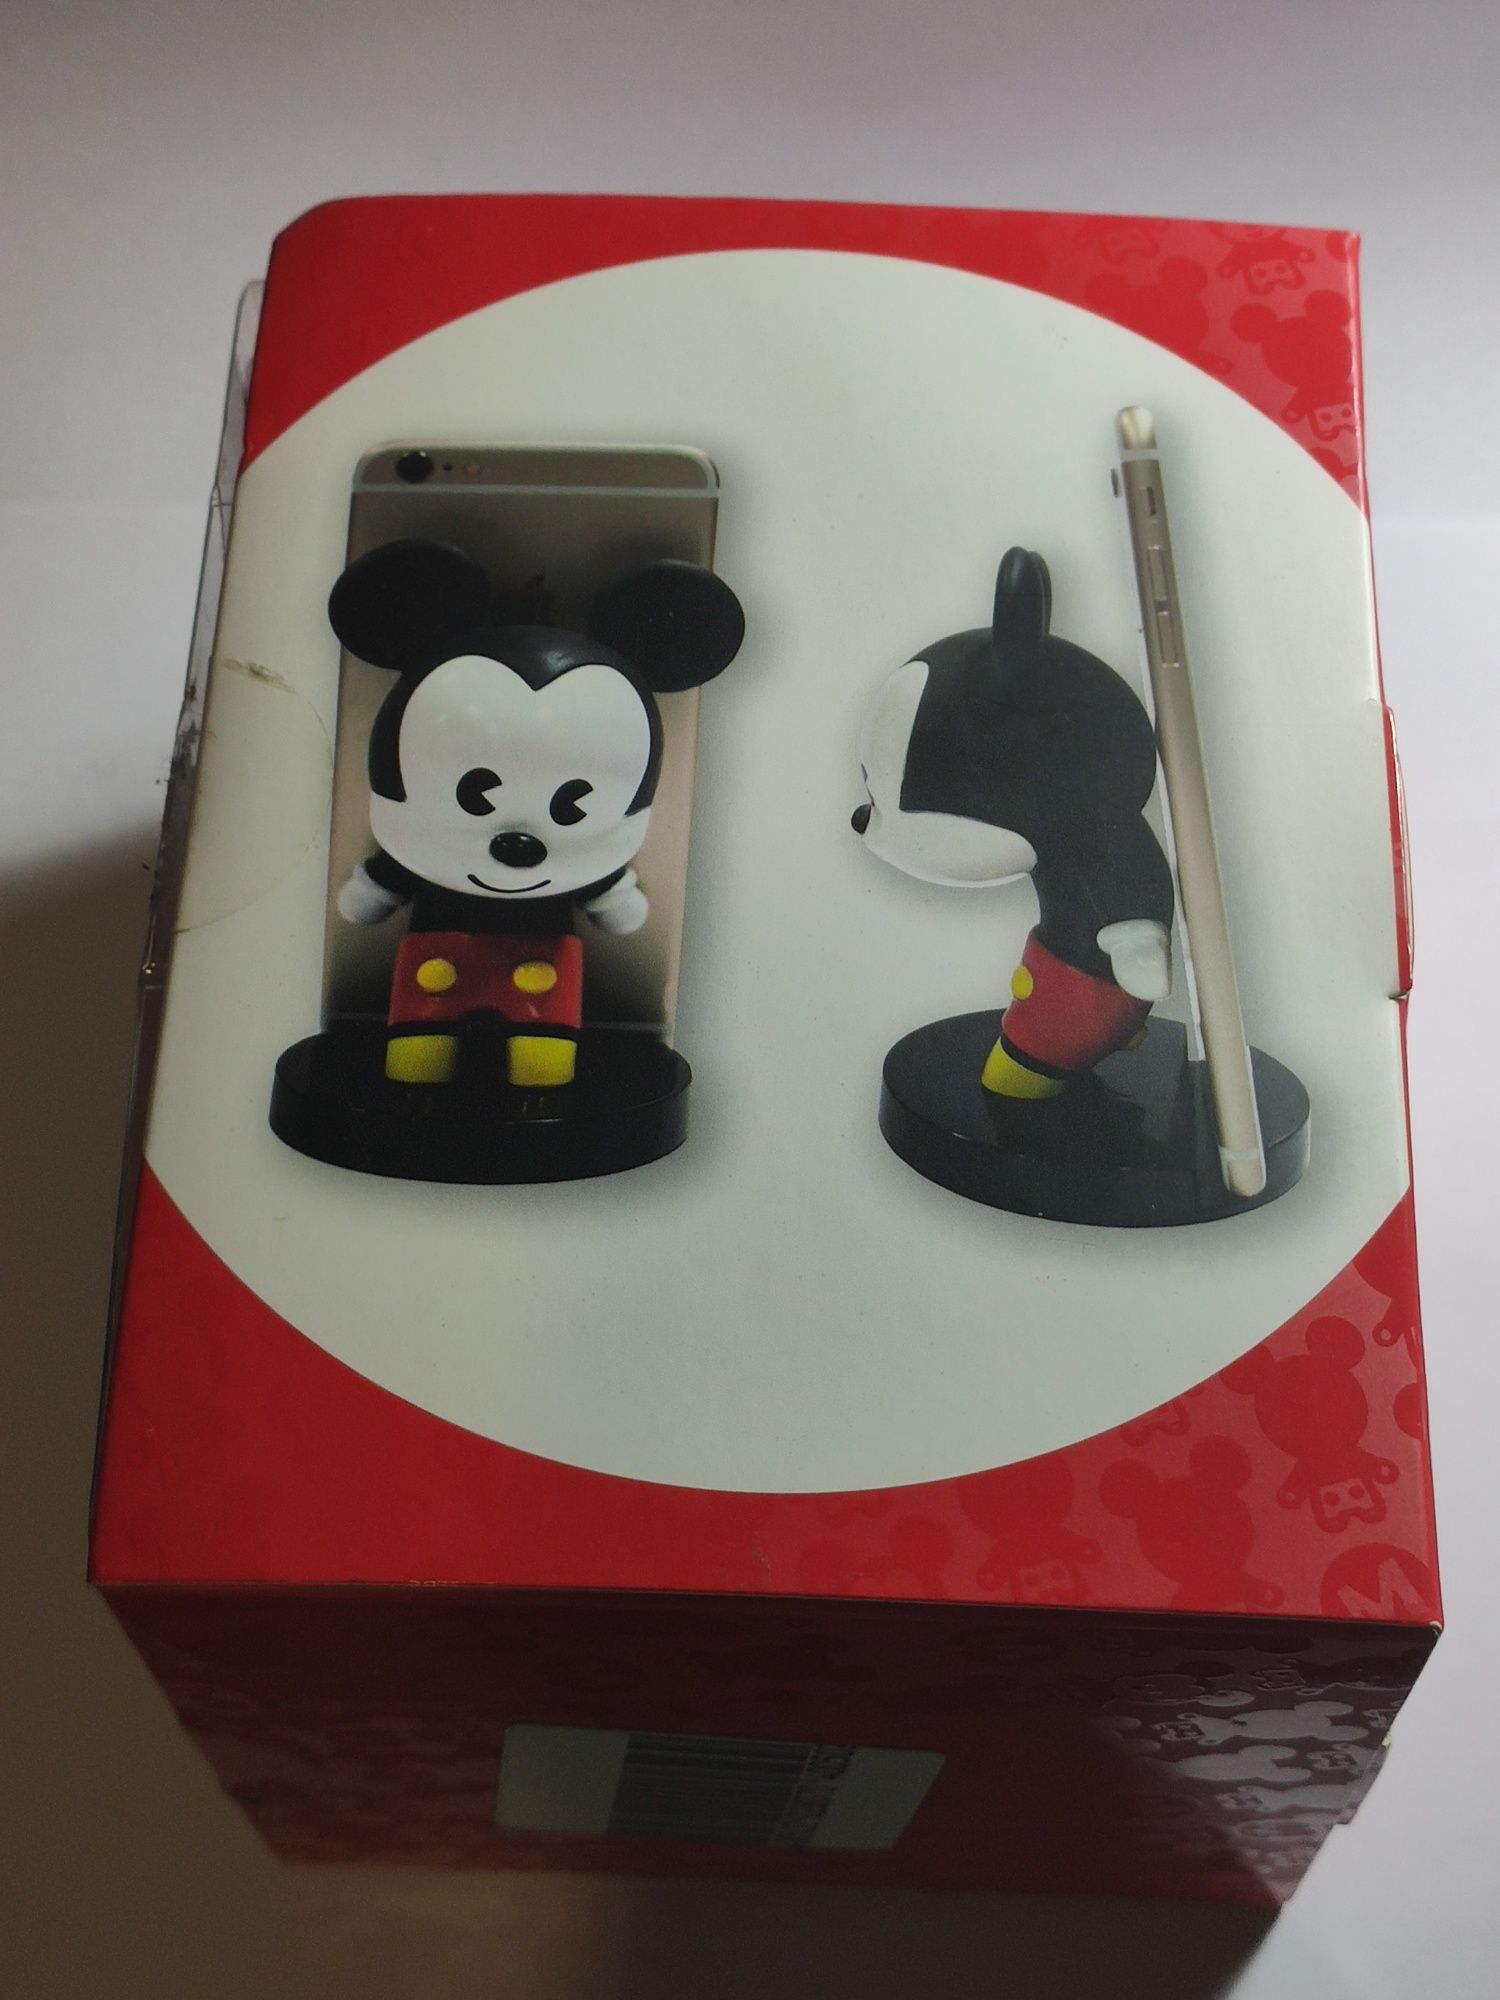 Phone stand / segurador de telemóvel do Mickey mouse oficial da Disney